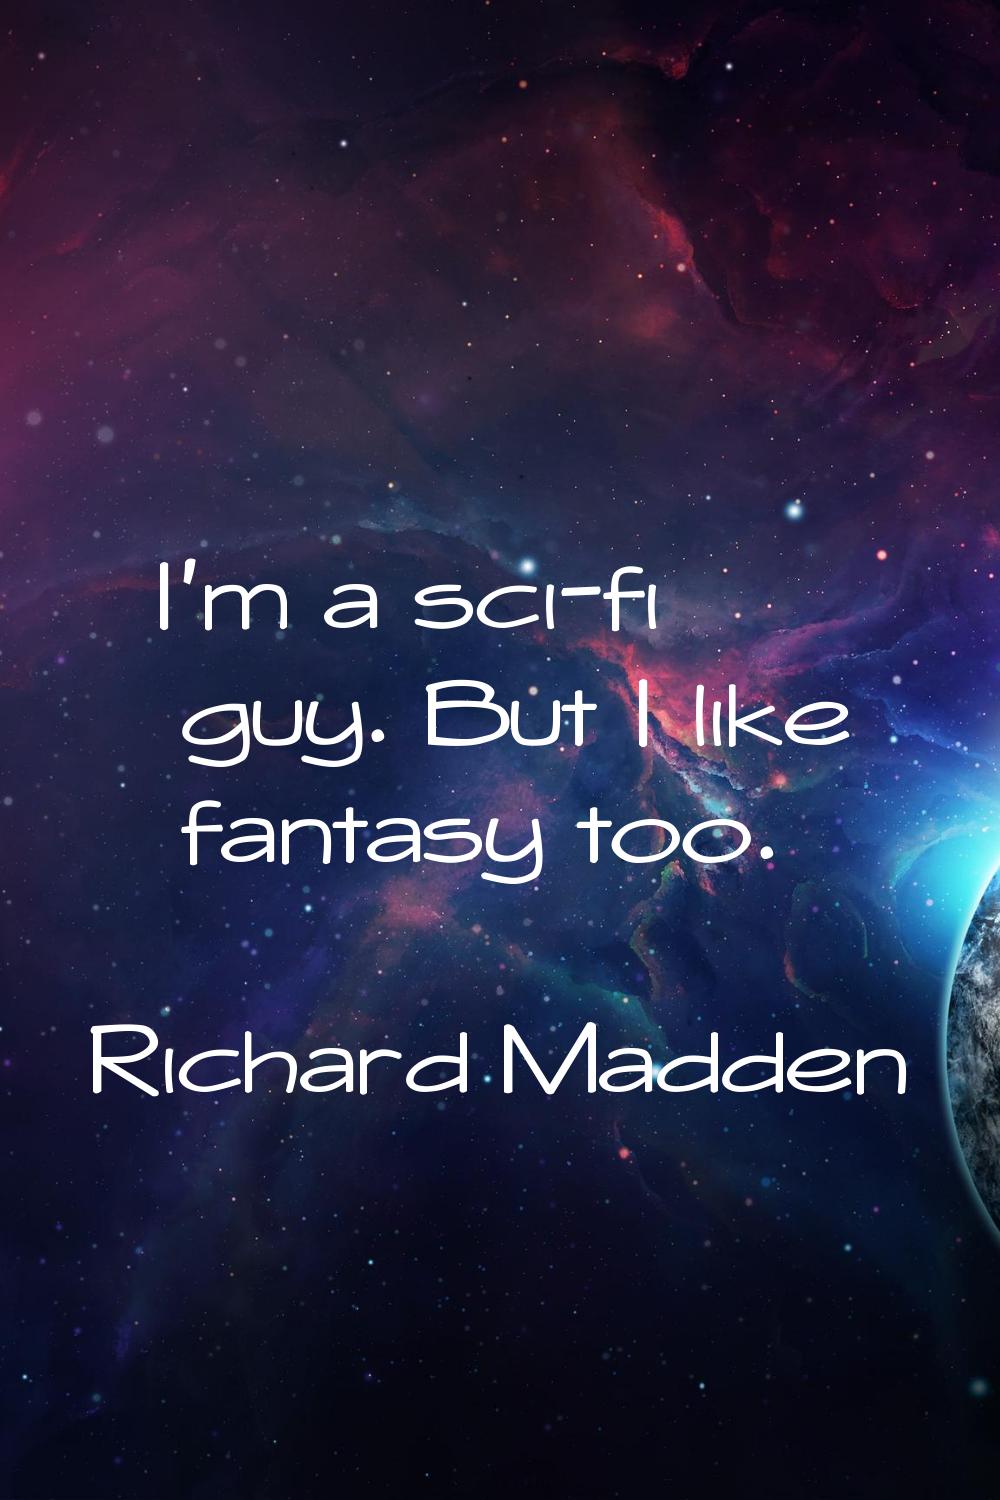 I'm a sci-fi guy. But I like fantasy too.